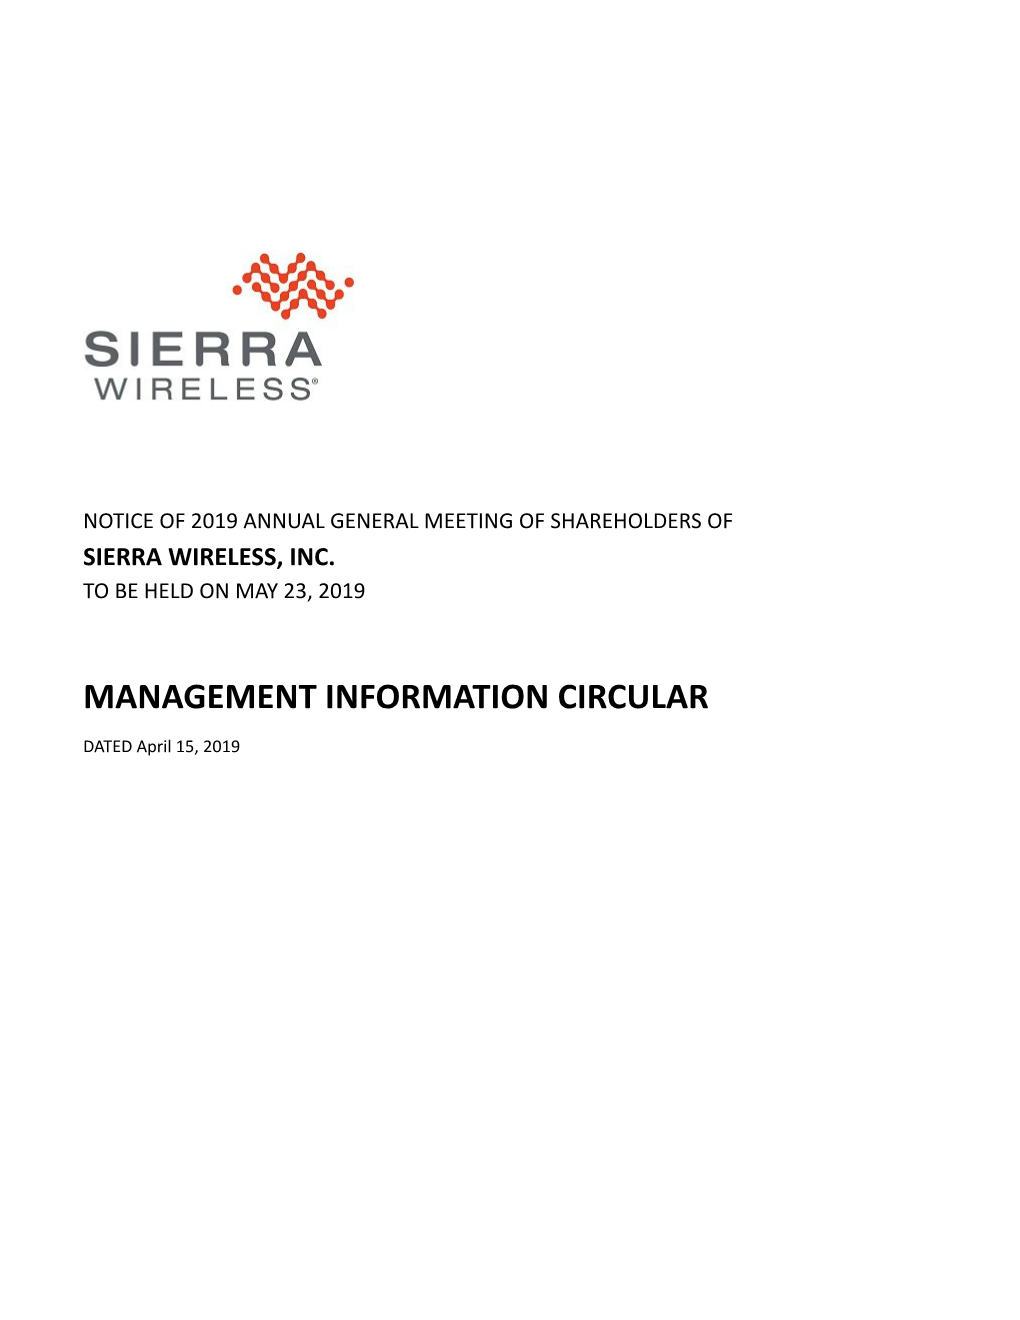 2019 Management Information Circular